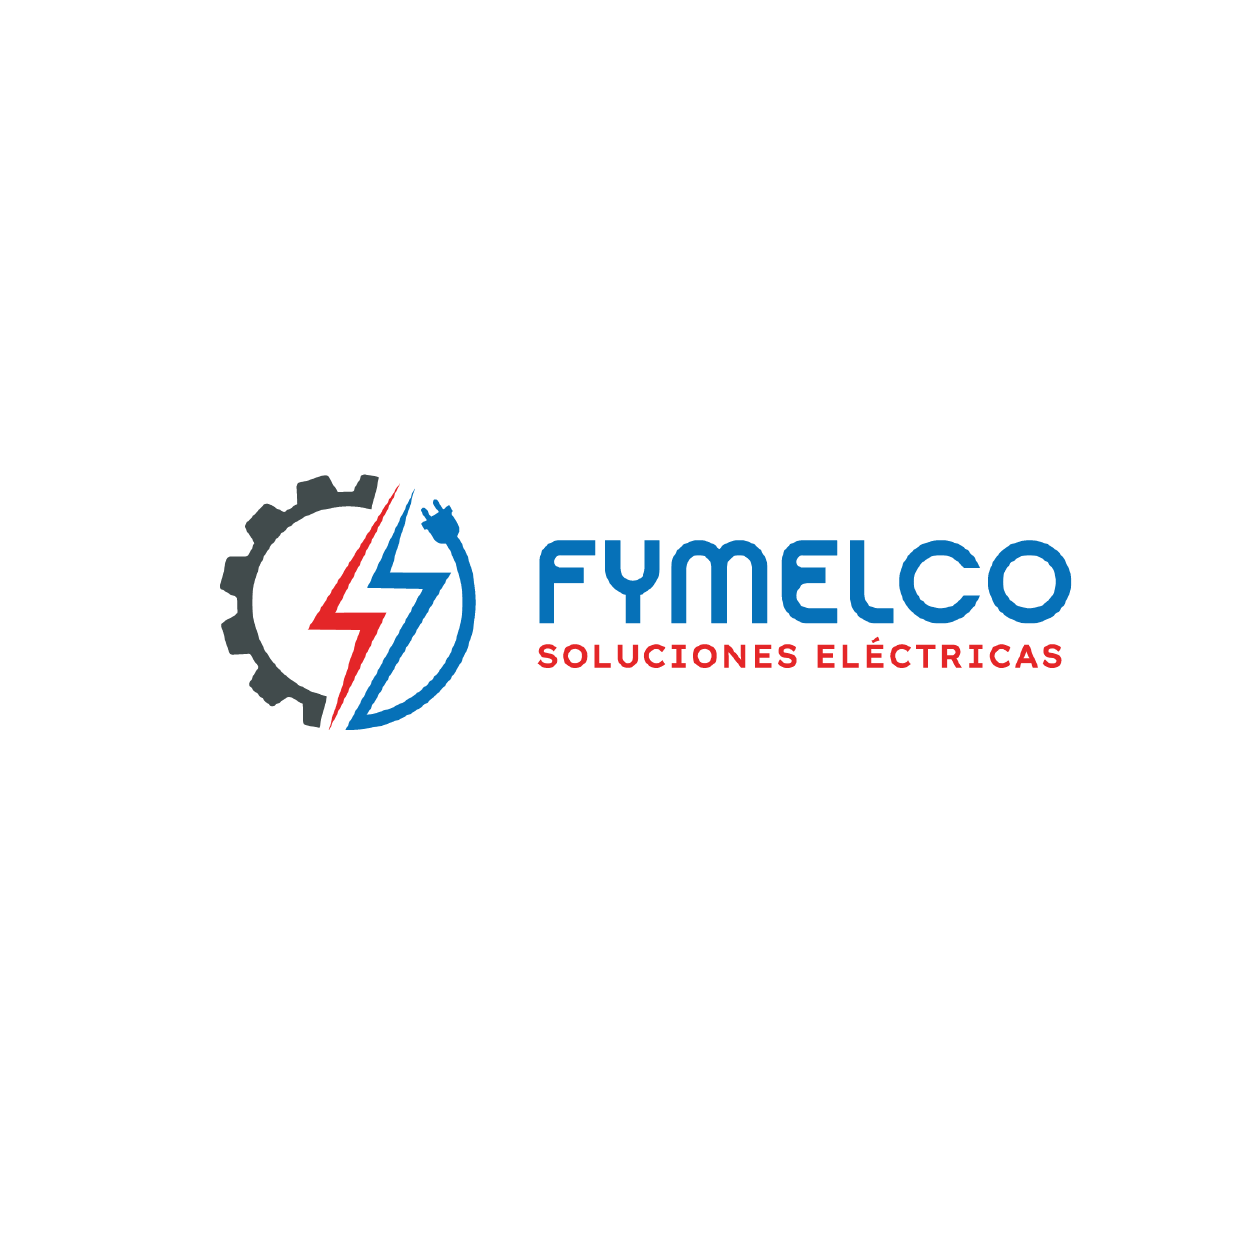 Diseño de Logotipo: Fymelco - Logos Peru - Diseño de Logos - Agencia de diseño de Logos - Nombres para Restaurantes Peruanos - logos de constructoras - logo de empresas constructoras - diseño de logotipos en lima